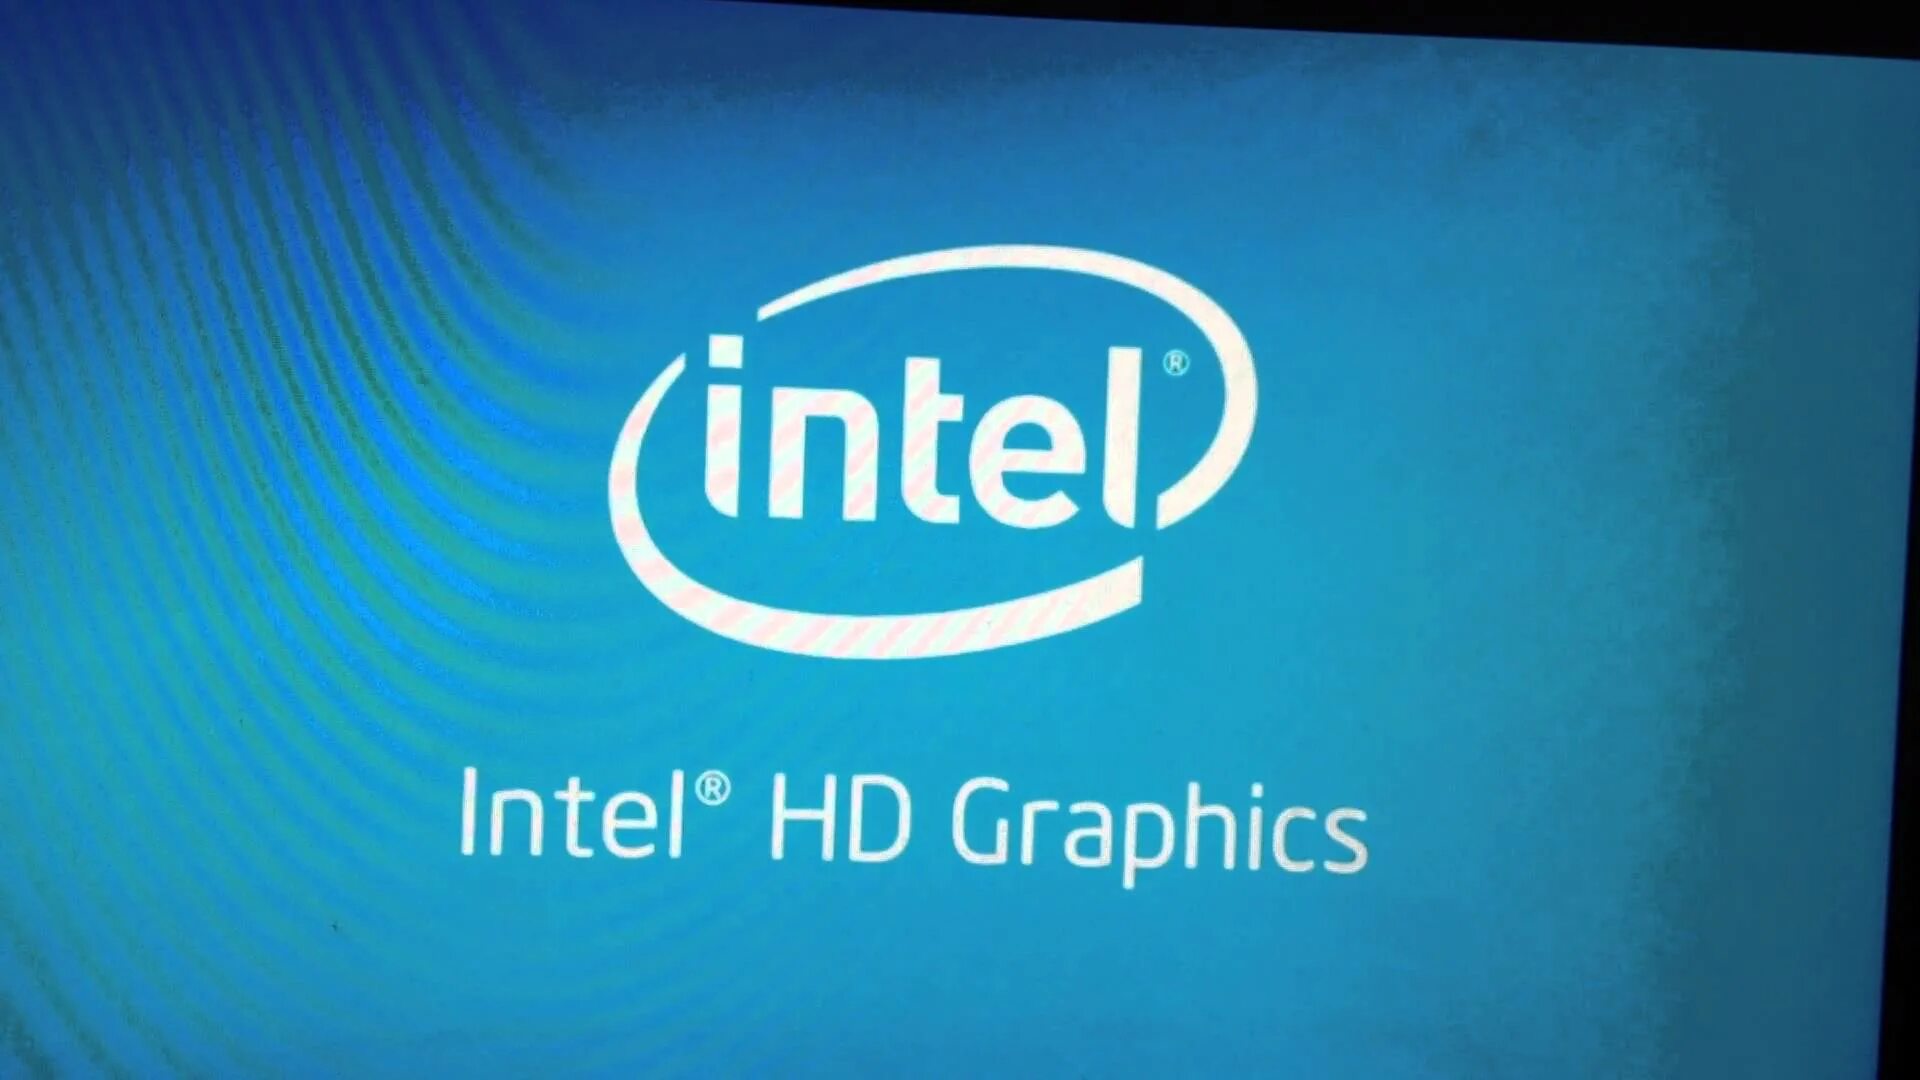 Intel. Intel sde